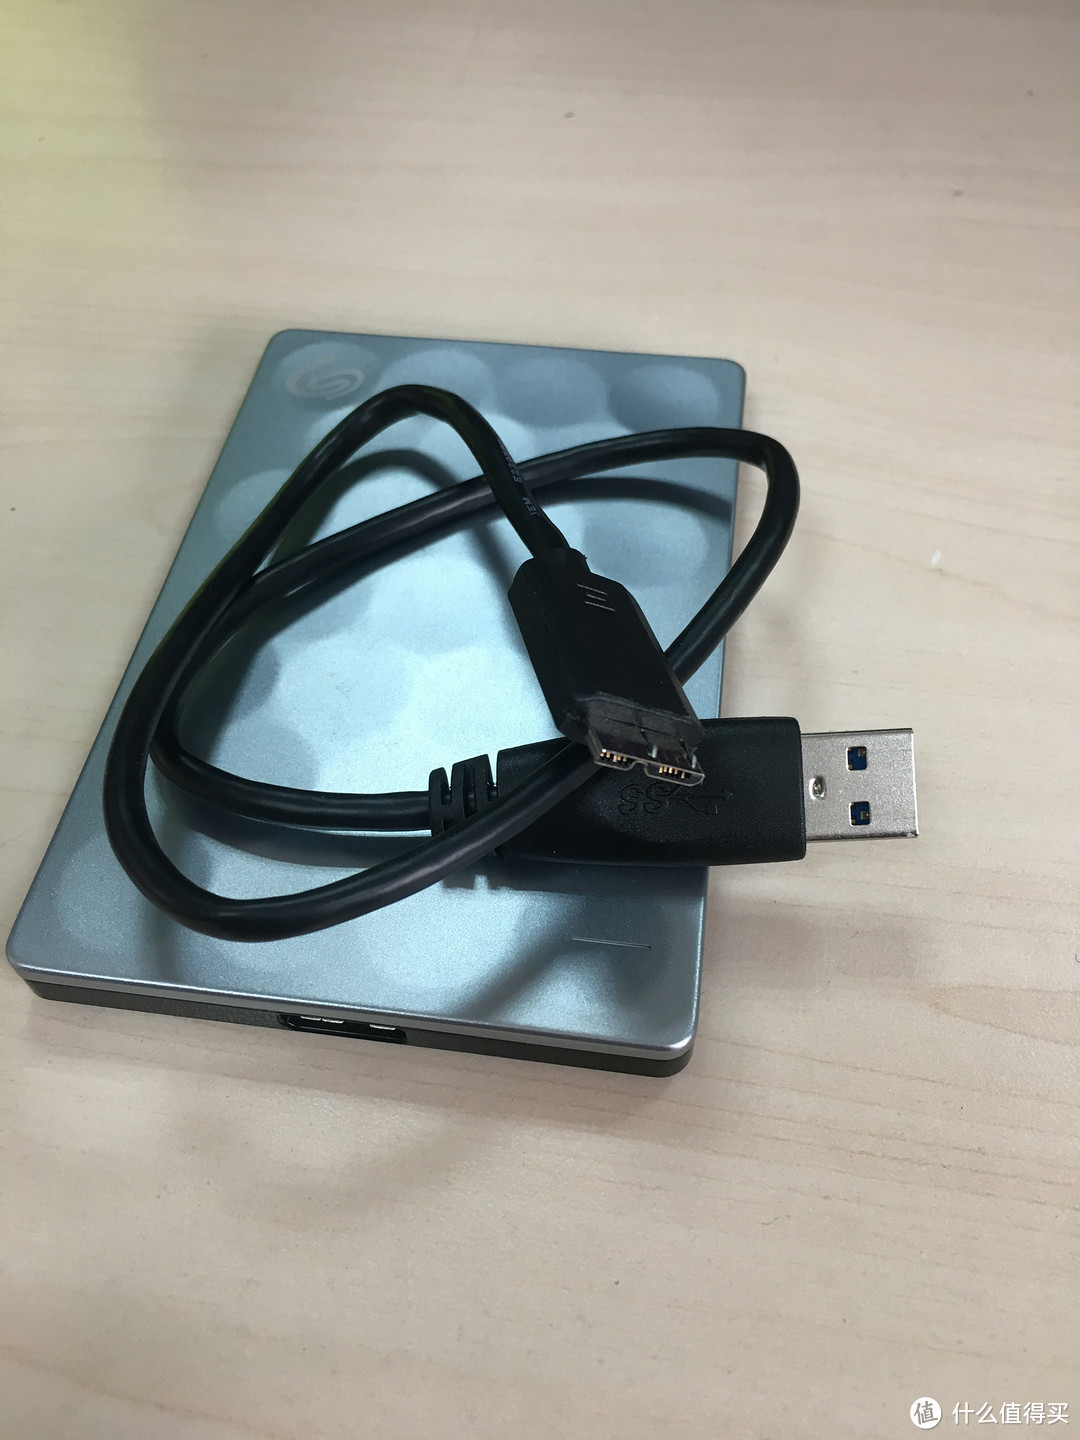 Seaga 希捷 Ultra slim 2TB 纤薄9.6mm 2.5英寸 USB3.0 移动硬盘